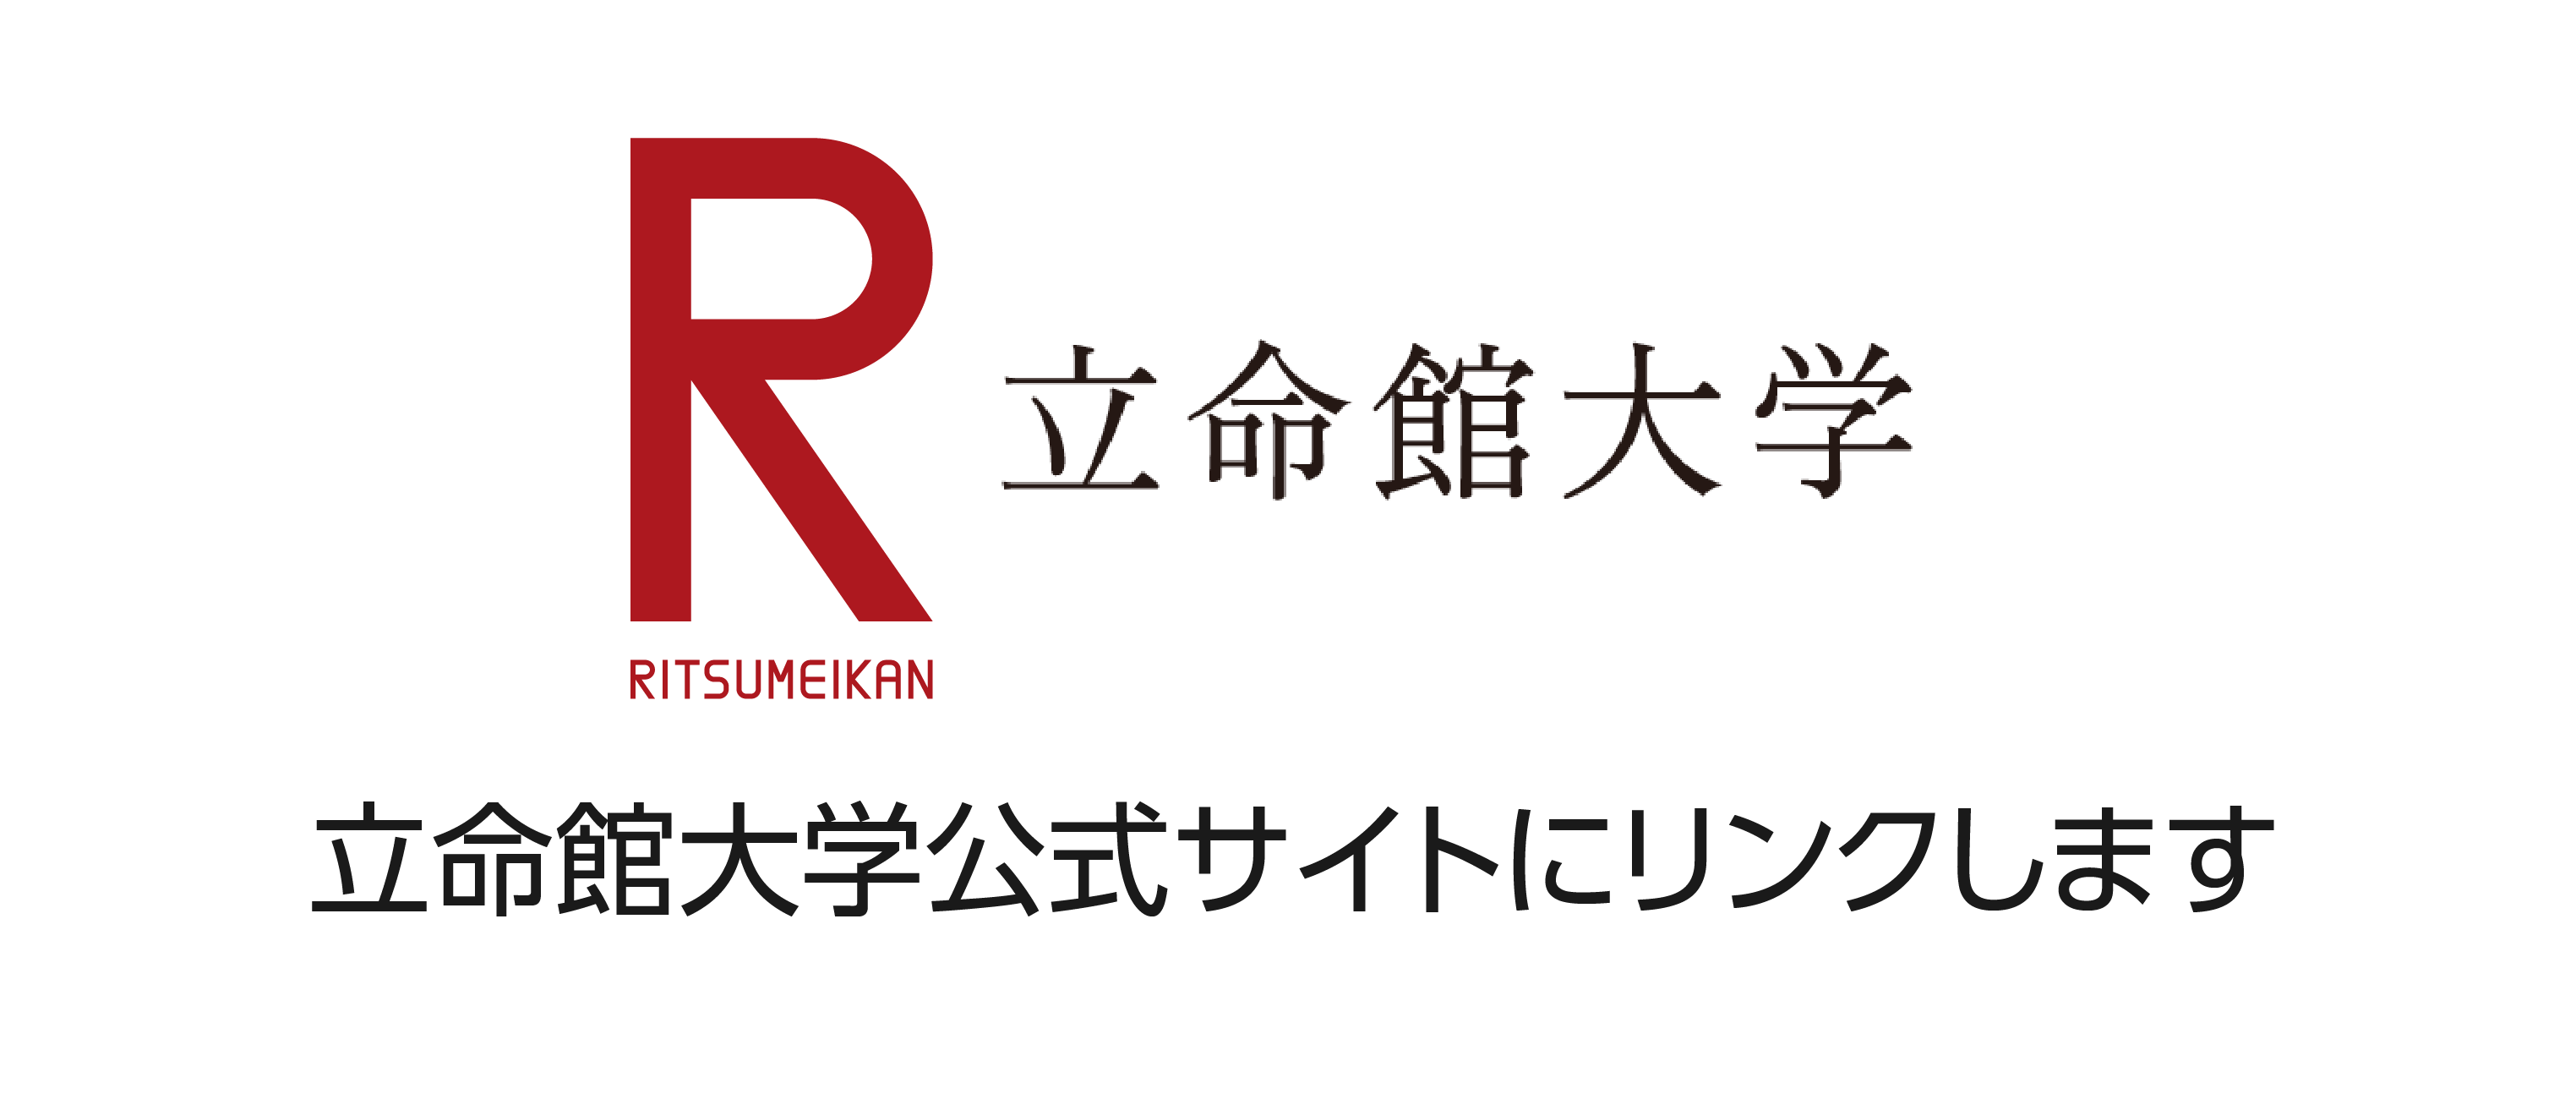 立命館大学新聞社 Ritsumeikan Univ Press